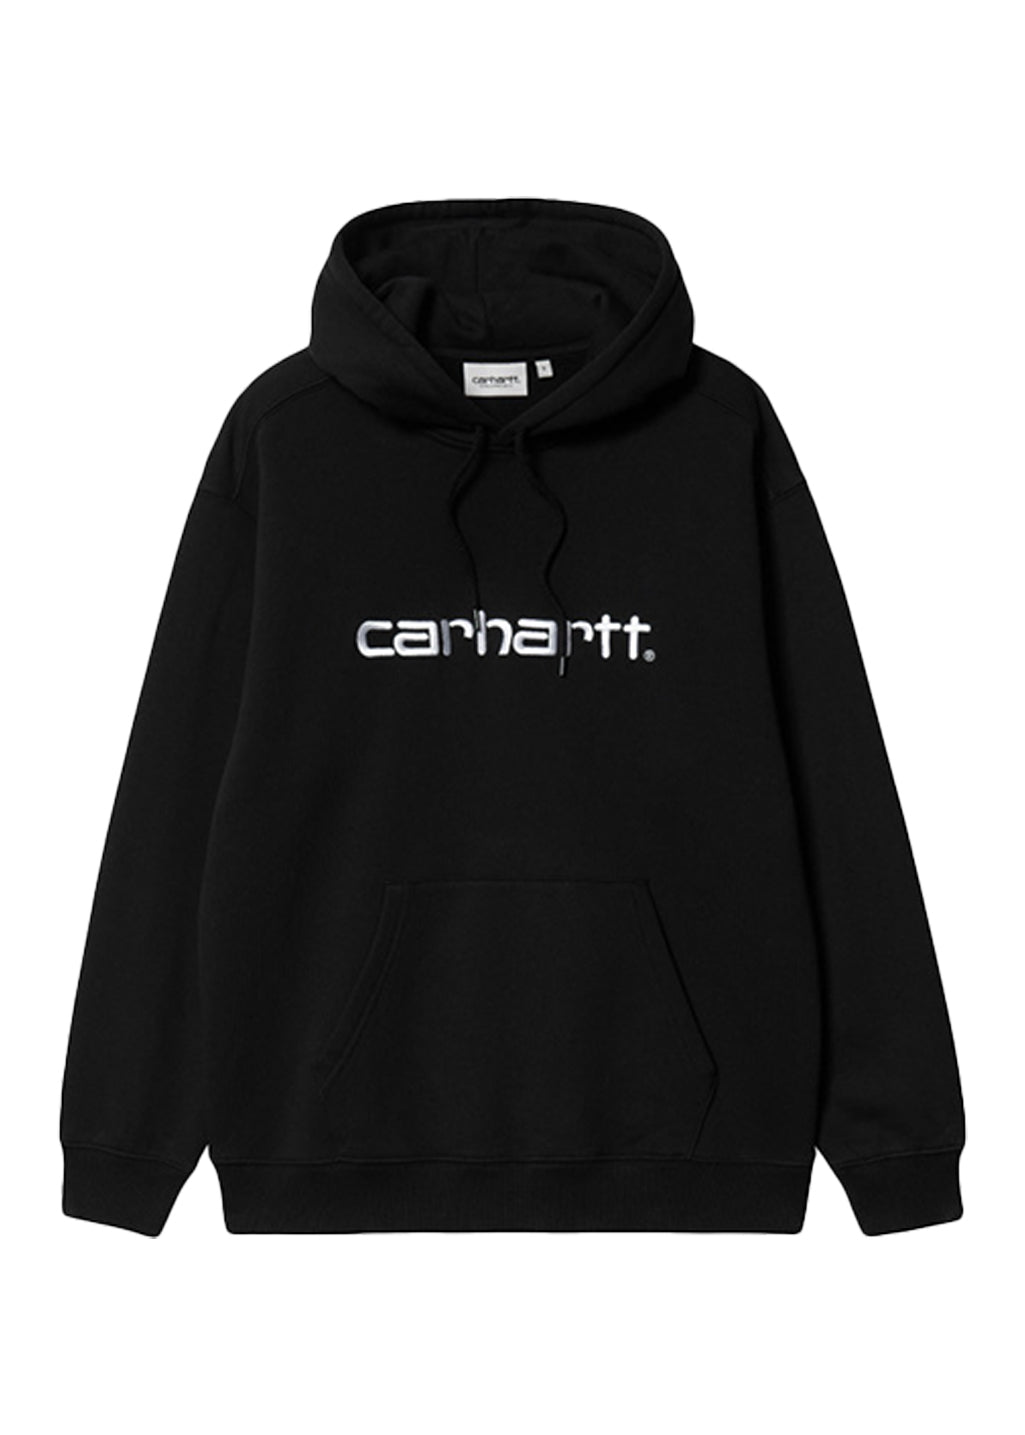 Carhartt WIP - Hooded Carhartt Sweatshirt - Black/White - Hardpressed Print Studio Inc.